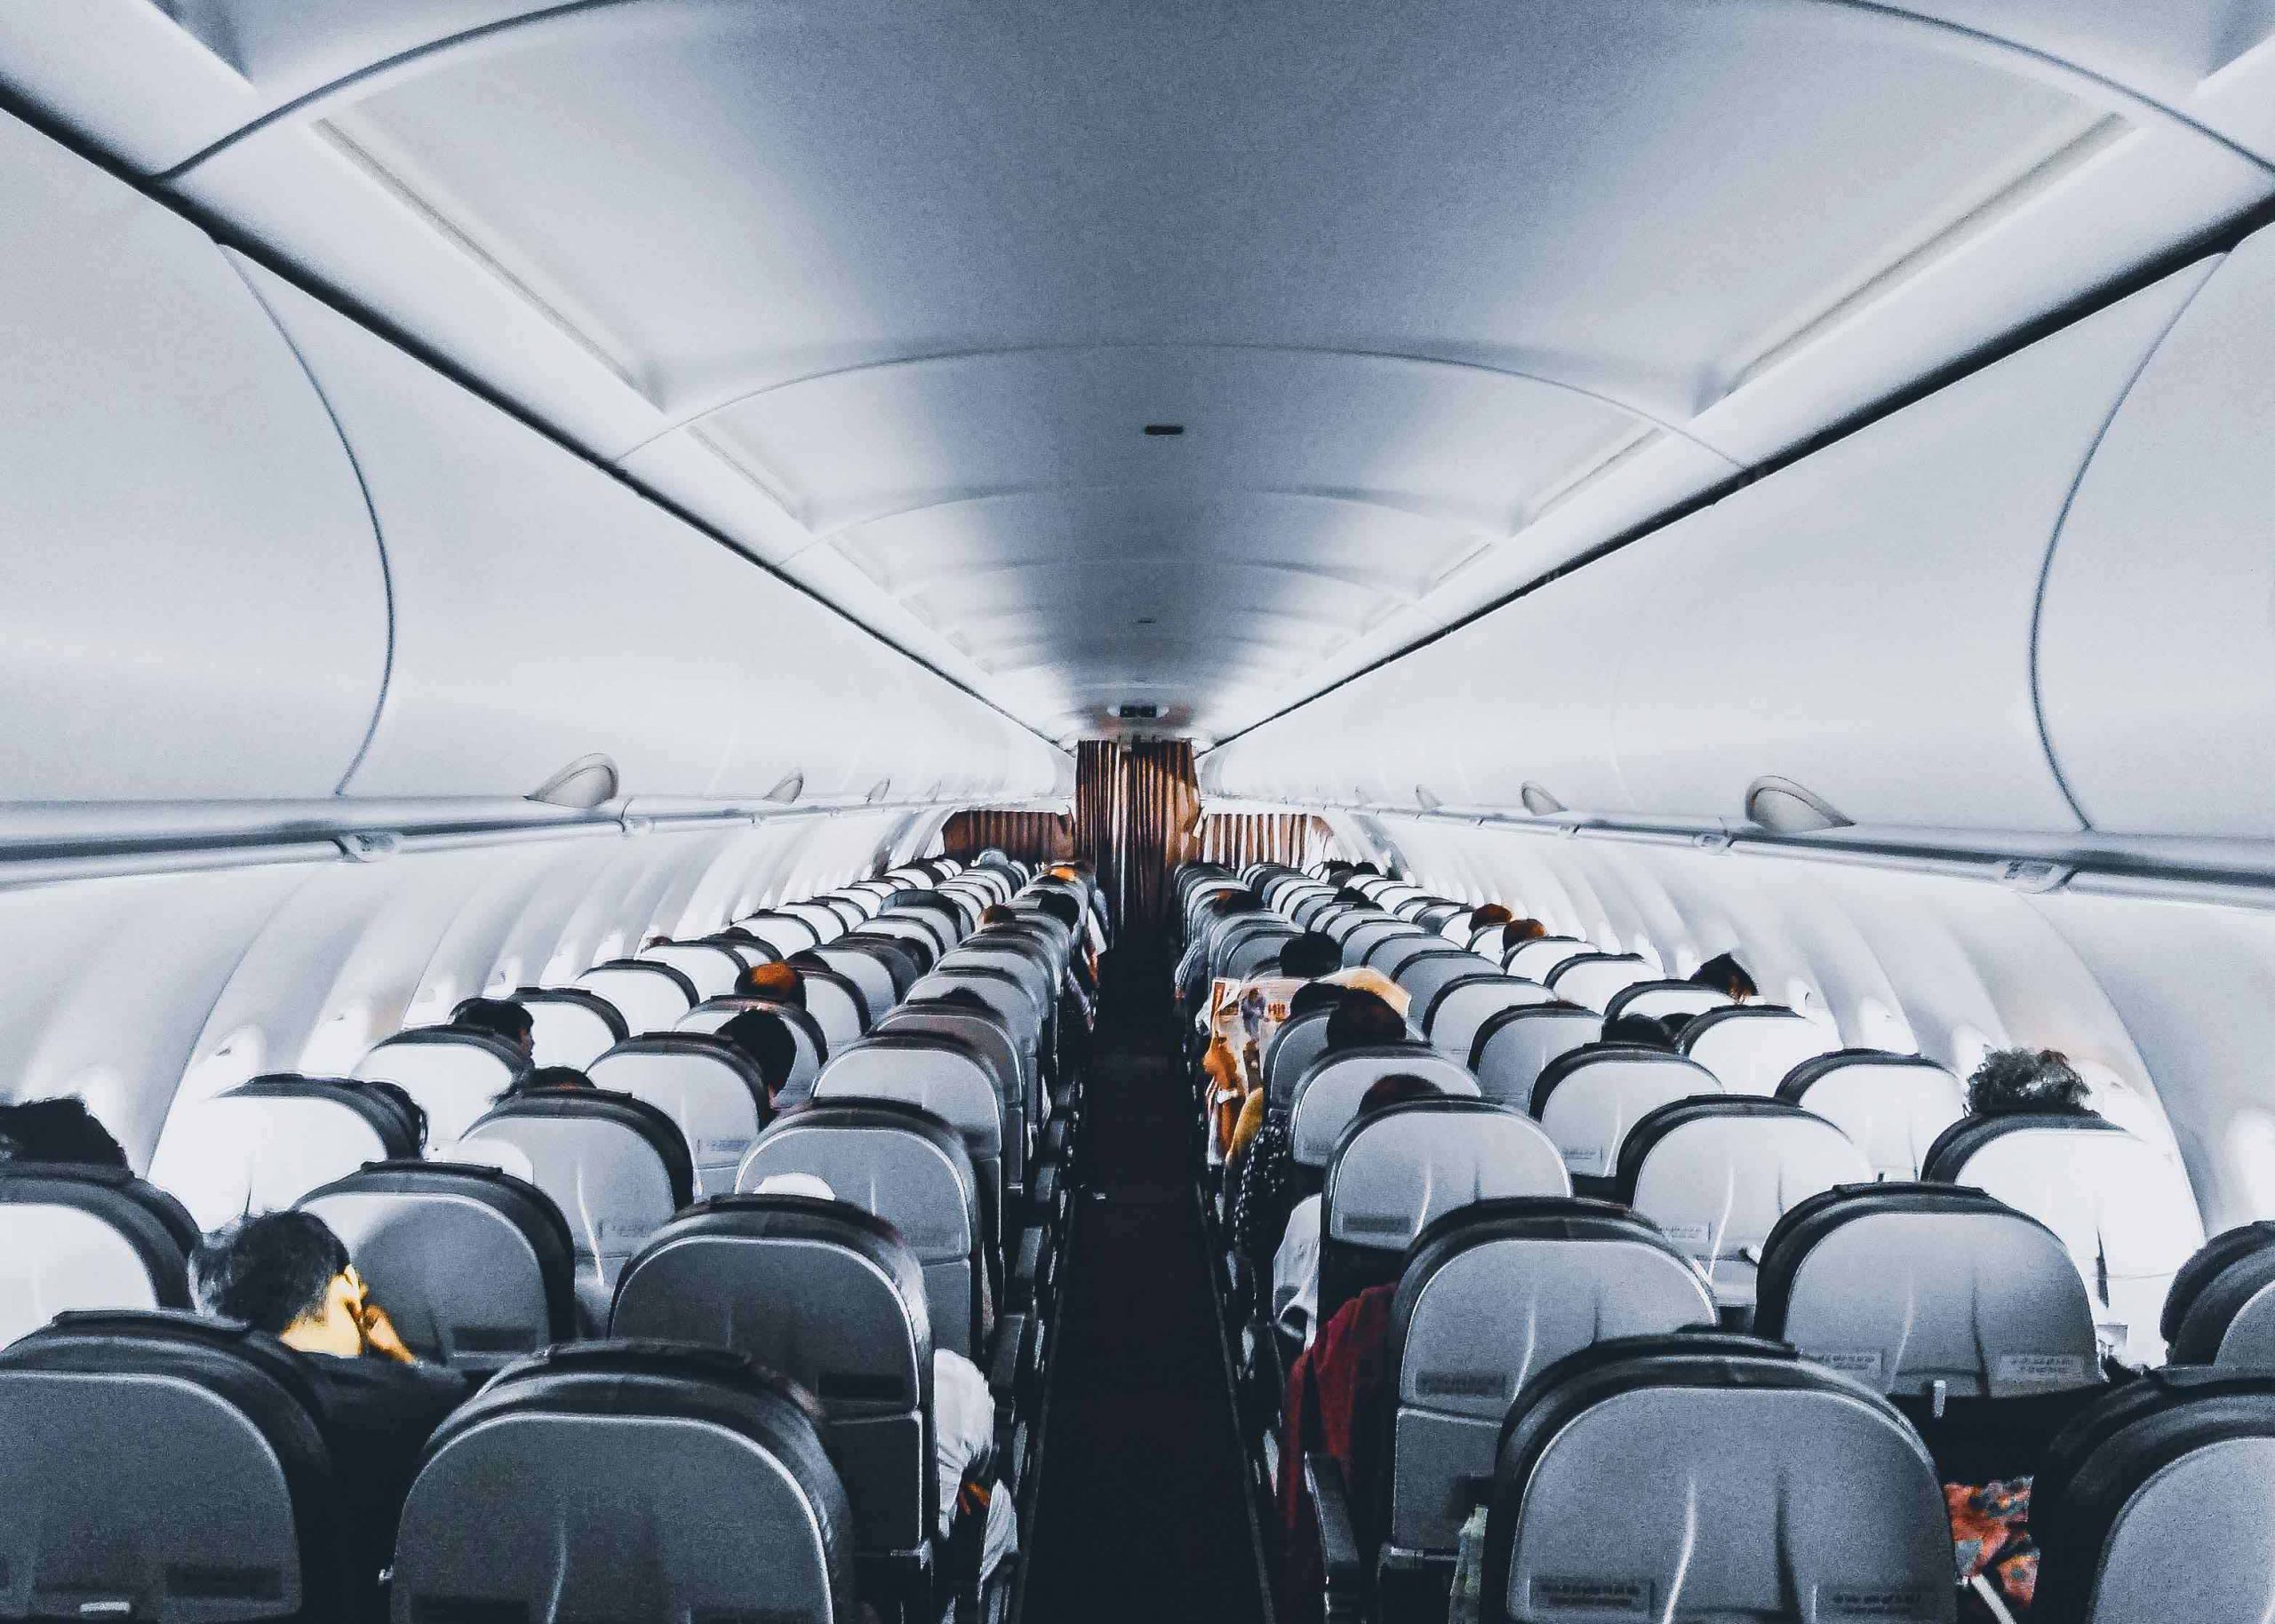 passenger area on the plane